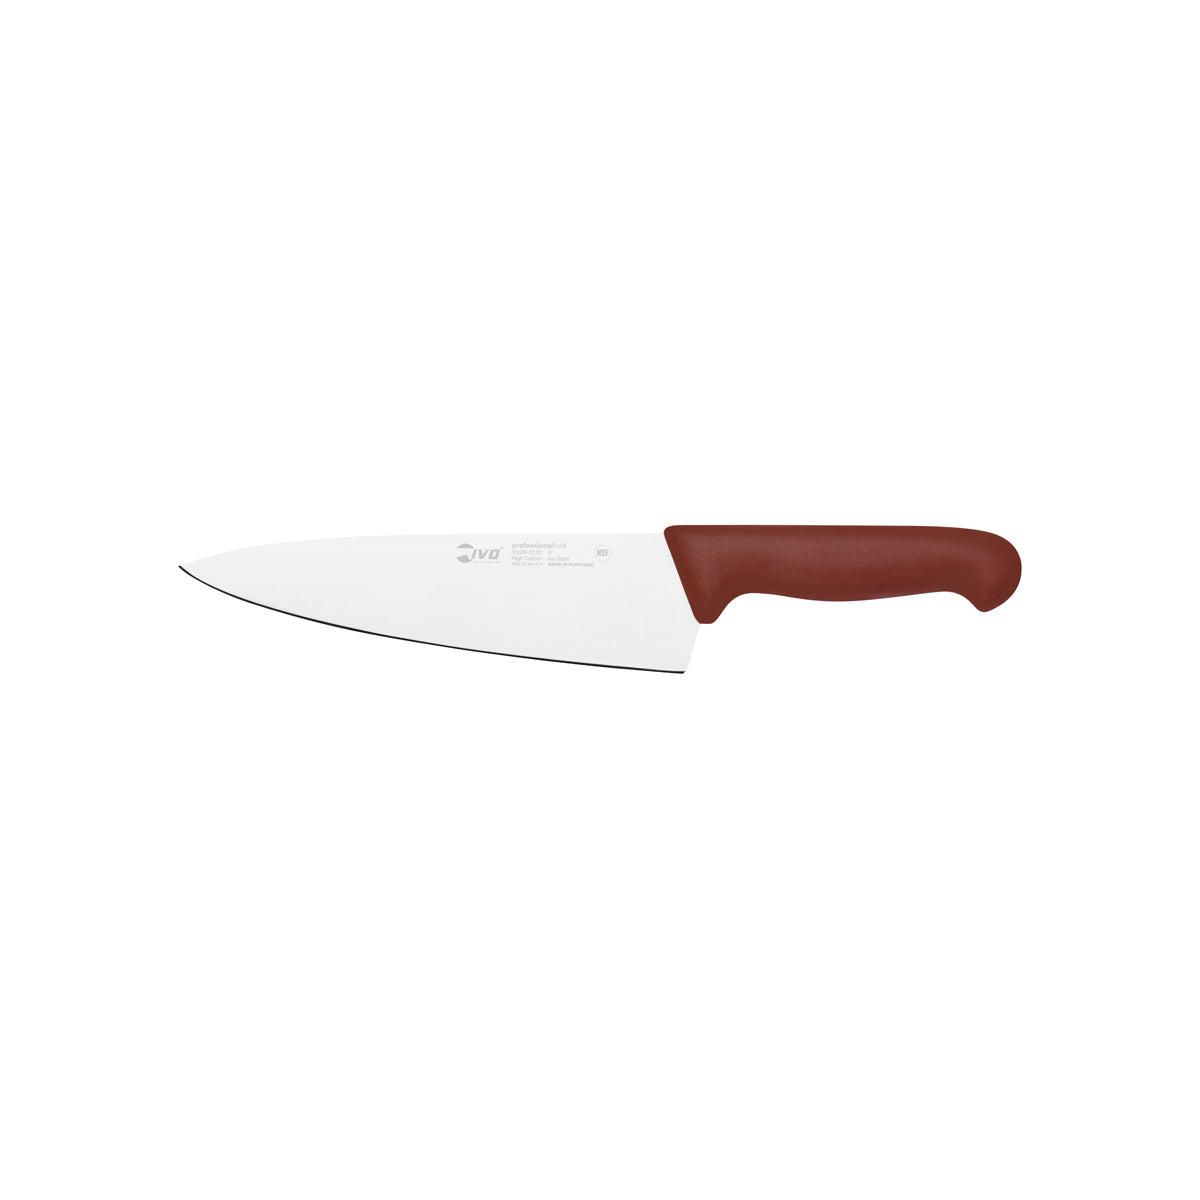 25428 Ivo Professional Line I Chefs Knife Brown 200mm Tomkin Australia Hospitality Supplies